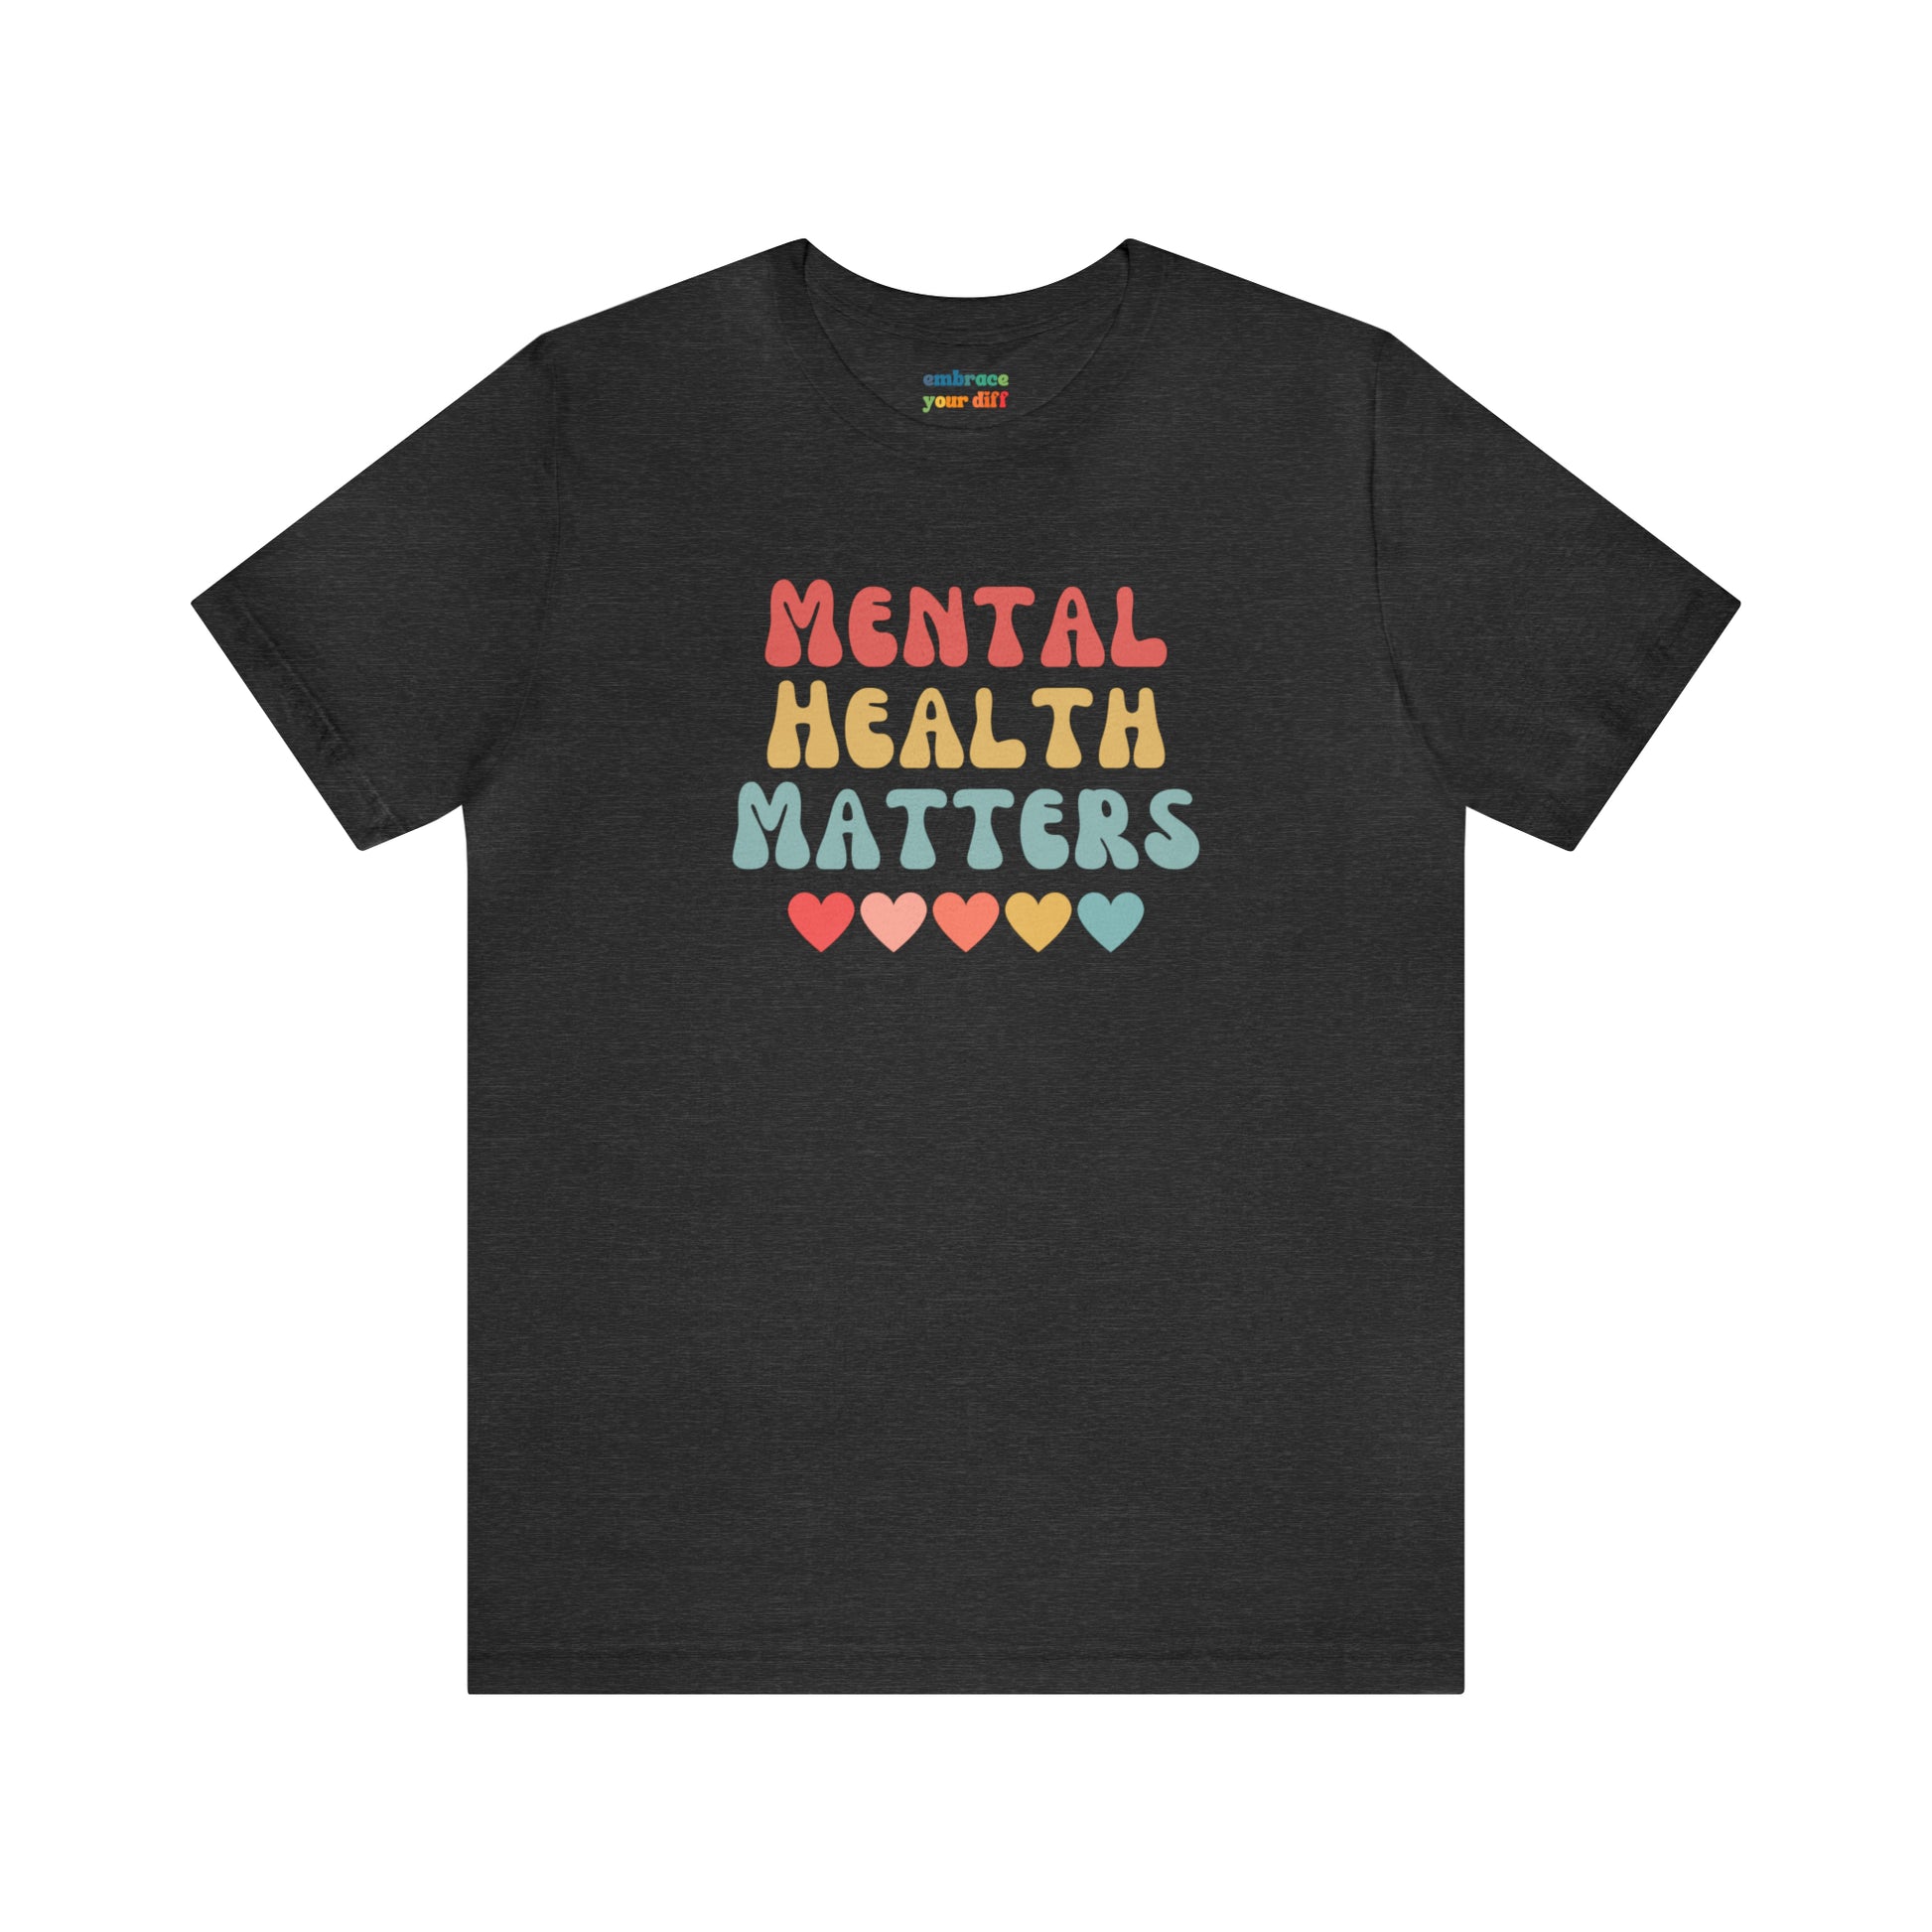 Retro Rainbow Hearts Unisex T-shirt - Embrace Your Diff